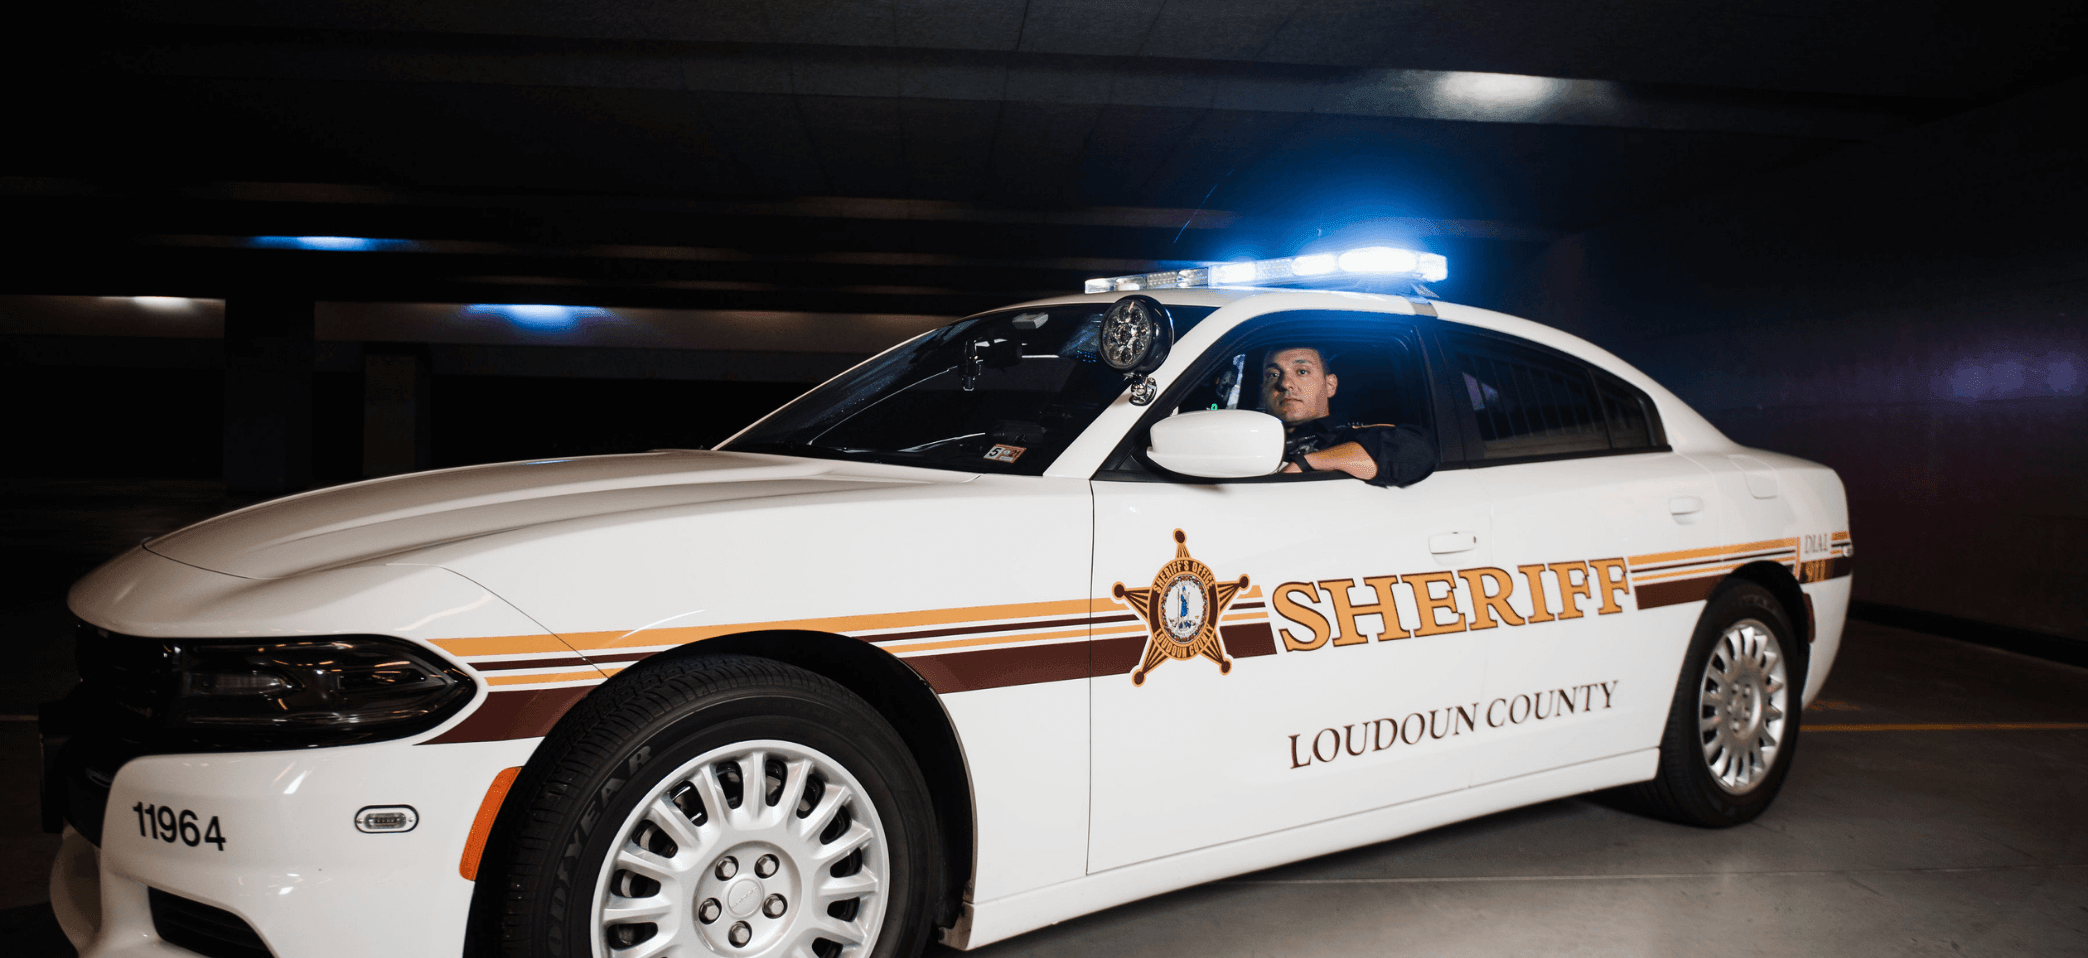 Image of Loudoun County Sheriff